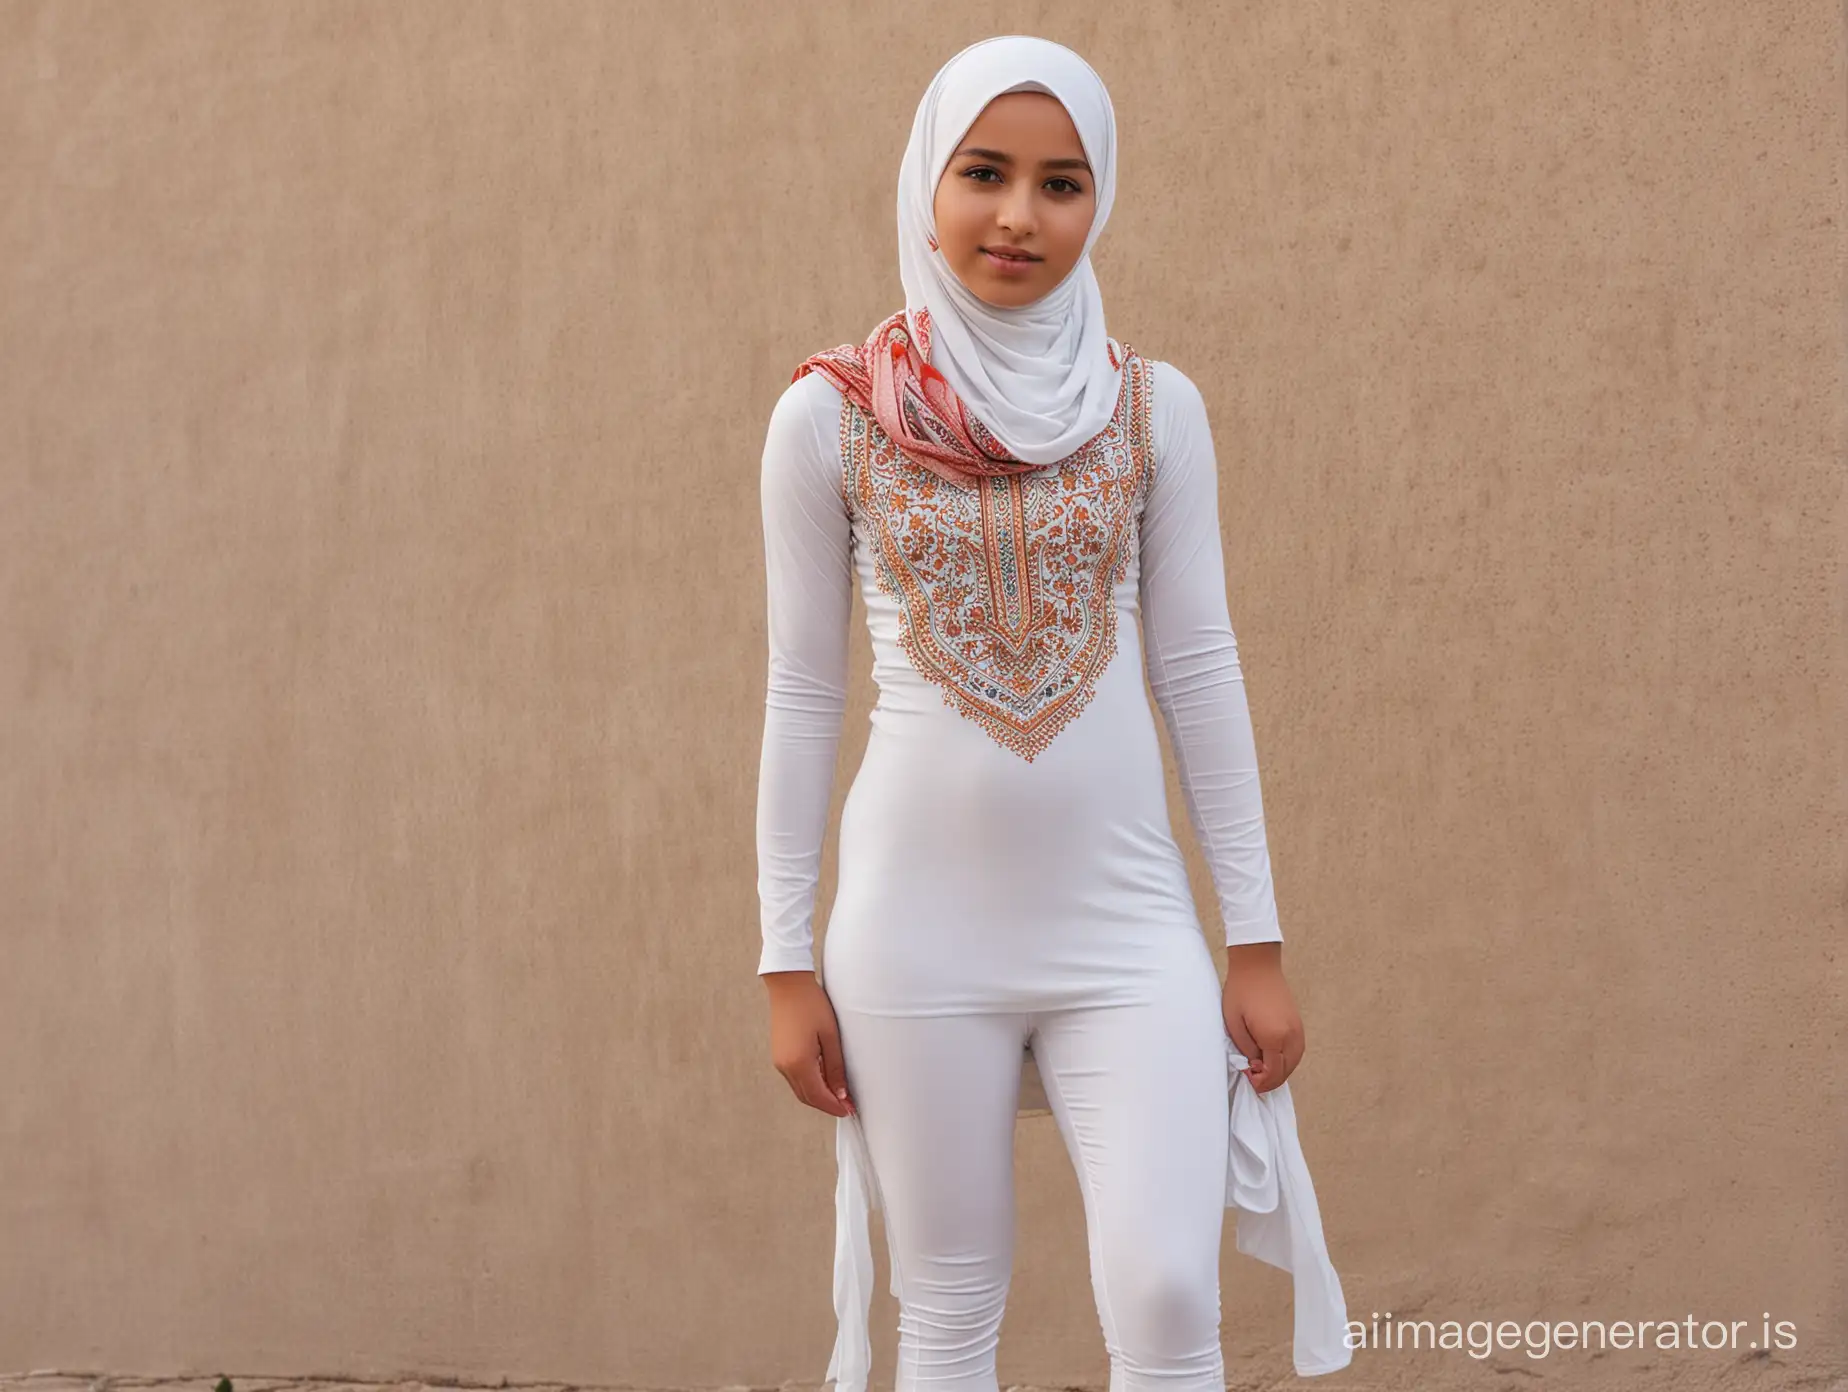 12 year, Muslim girl, white leggings ,full body, tight dress